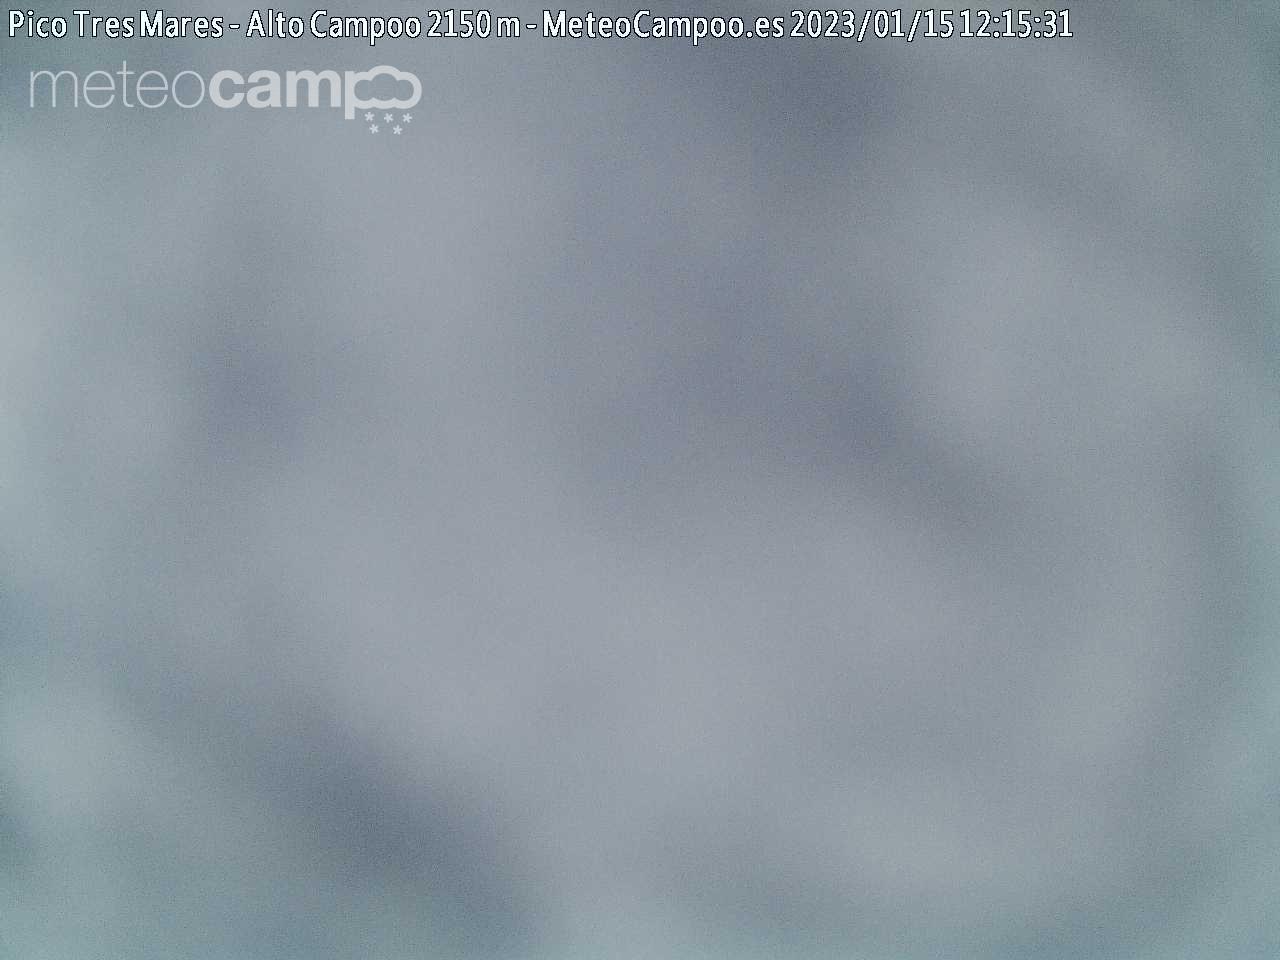 Webcam Alto Campoo Pico Tres Mares